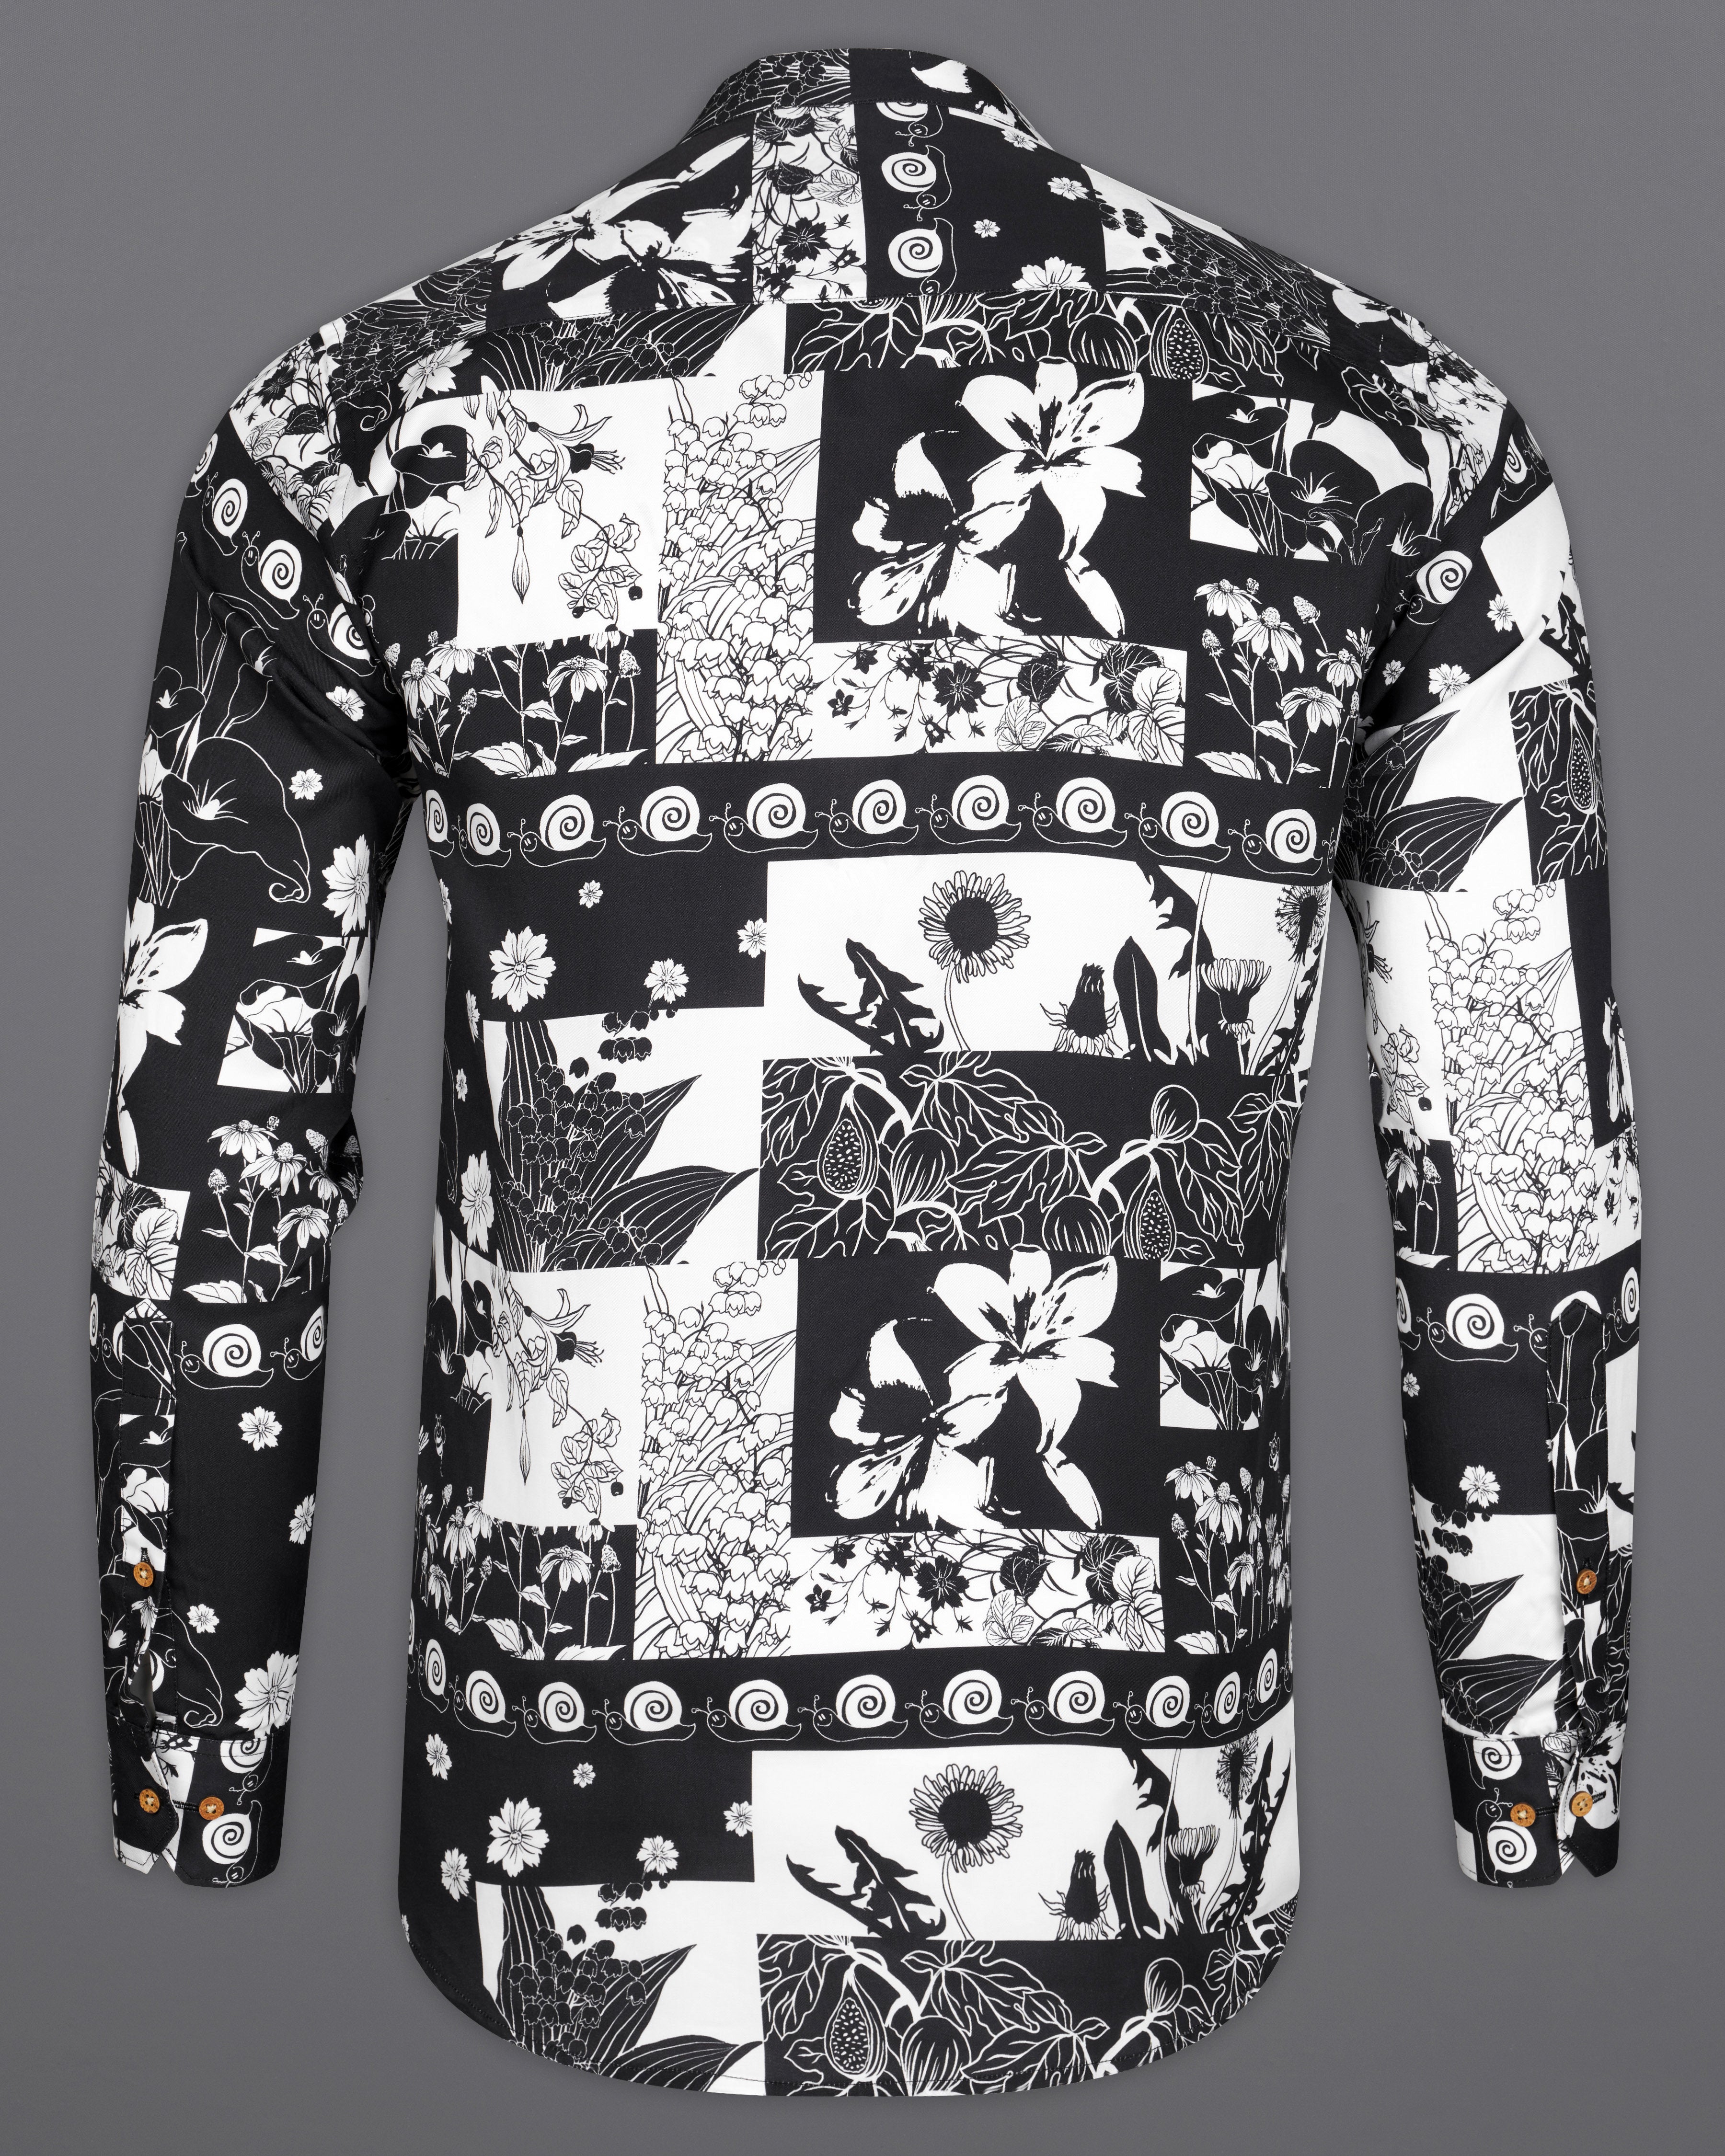 Tuatara Gray and White Floral Printed Twill Premium Cotton Kurta Shirt